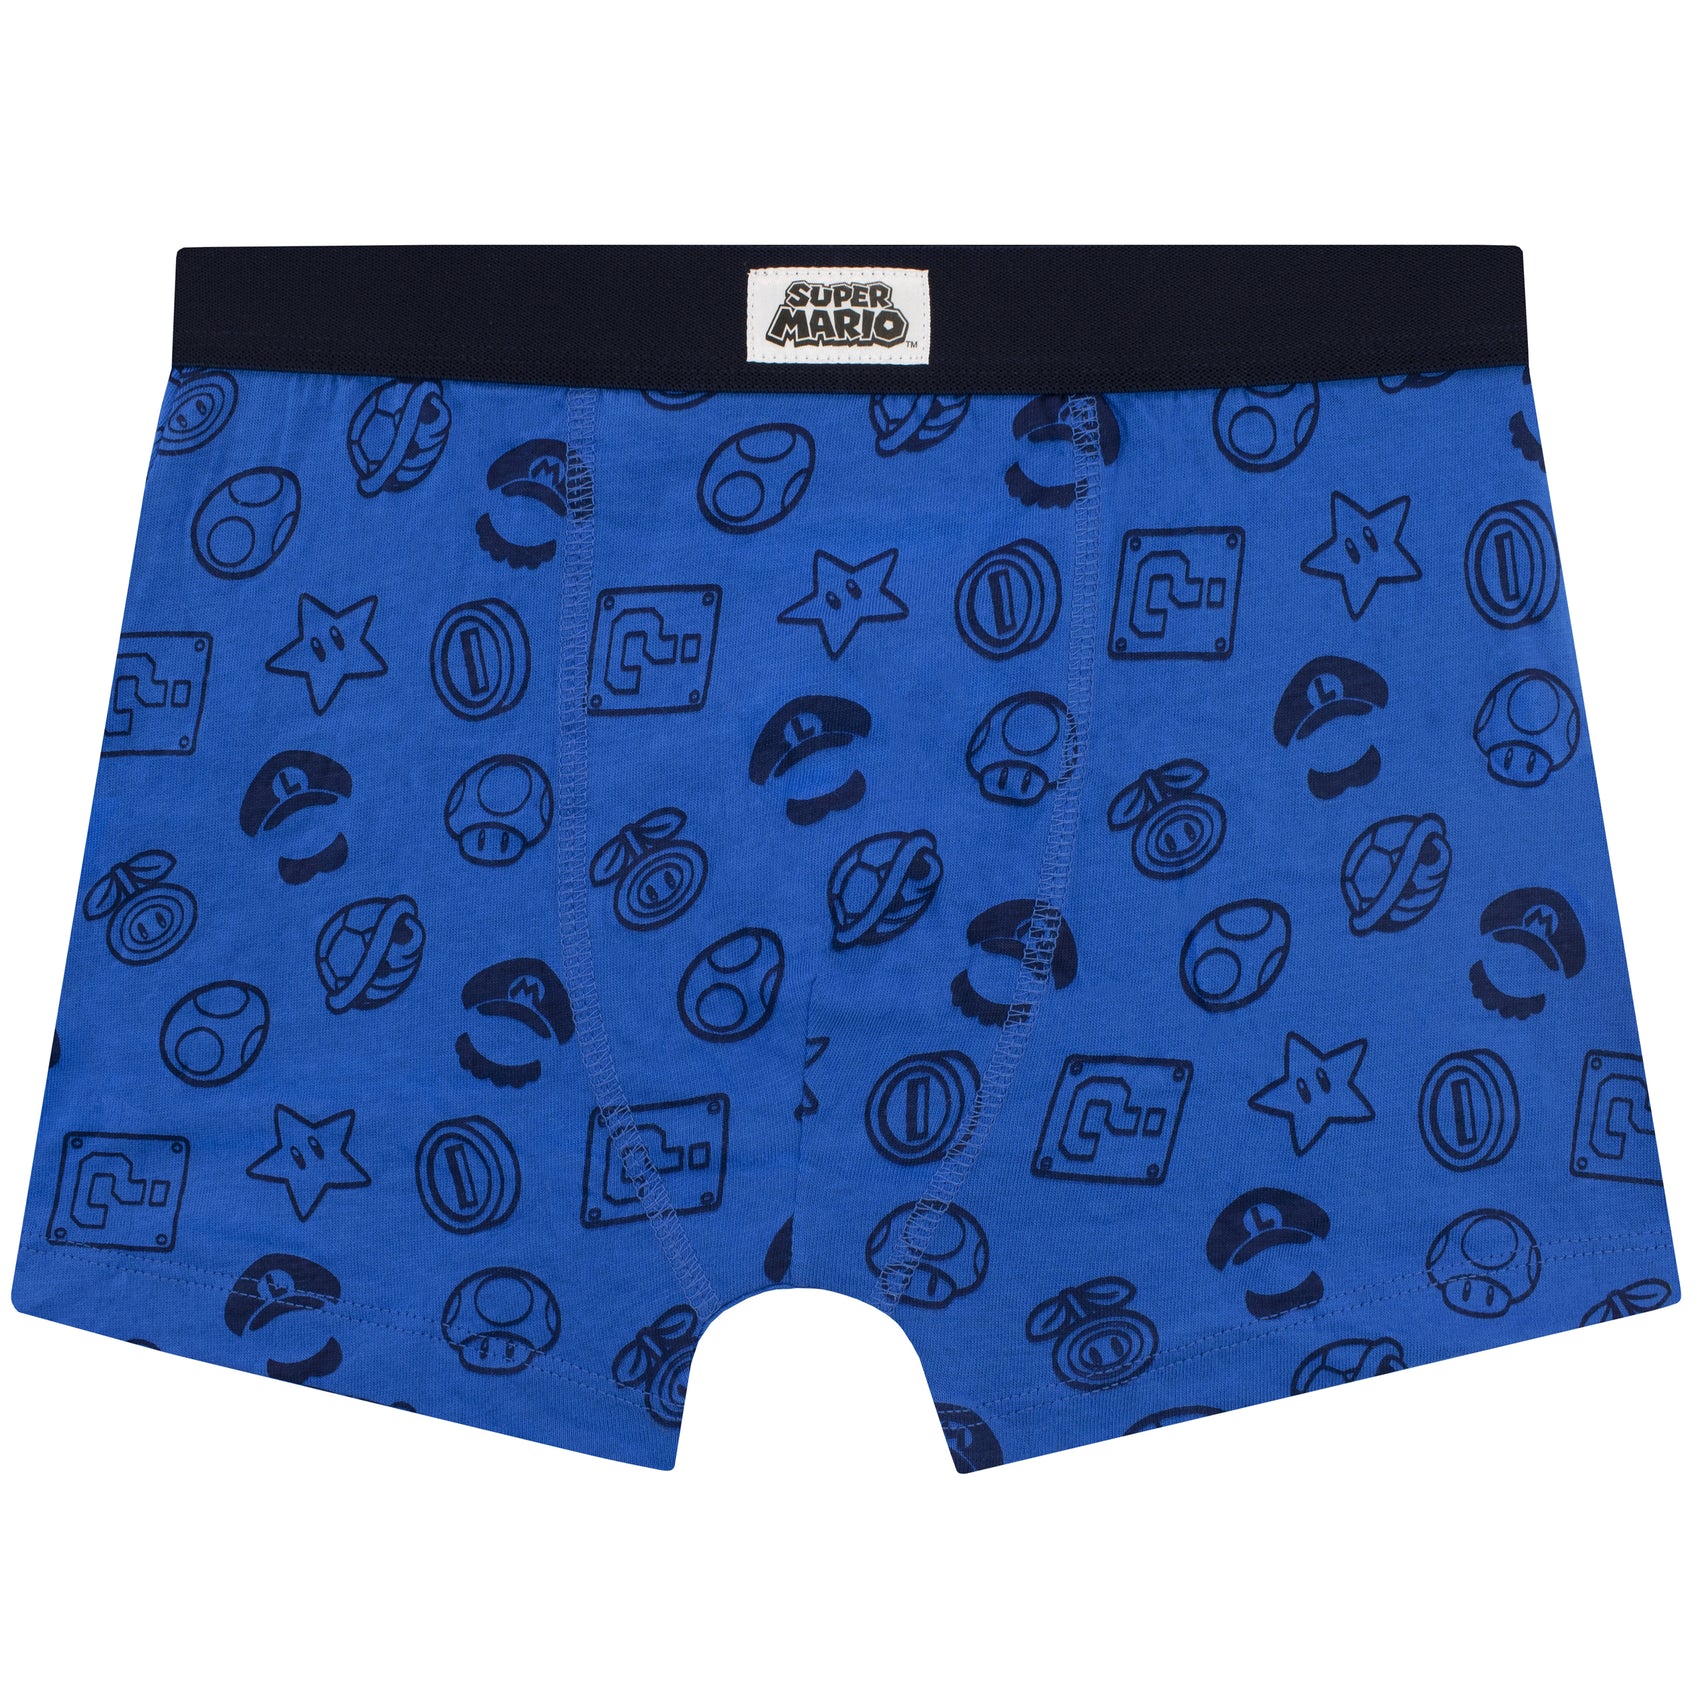 Super Mario 5 Pack Underwear | Kids | Official Character.com Merchandise